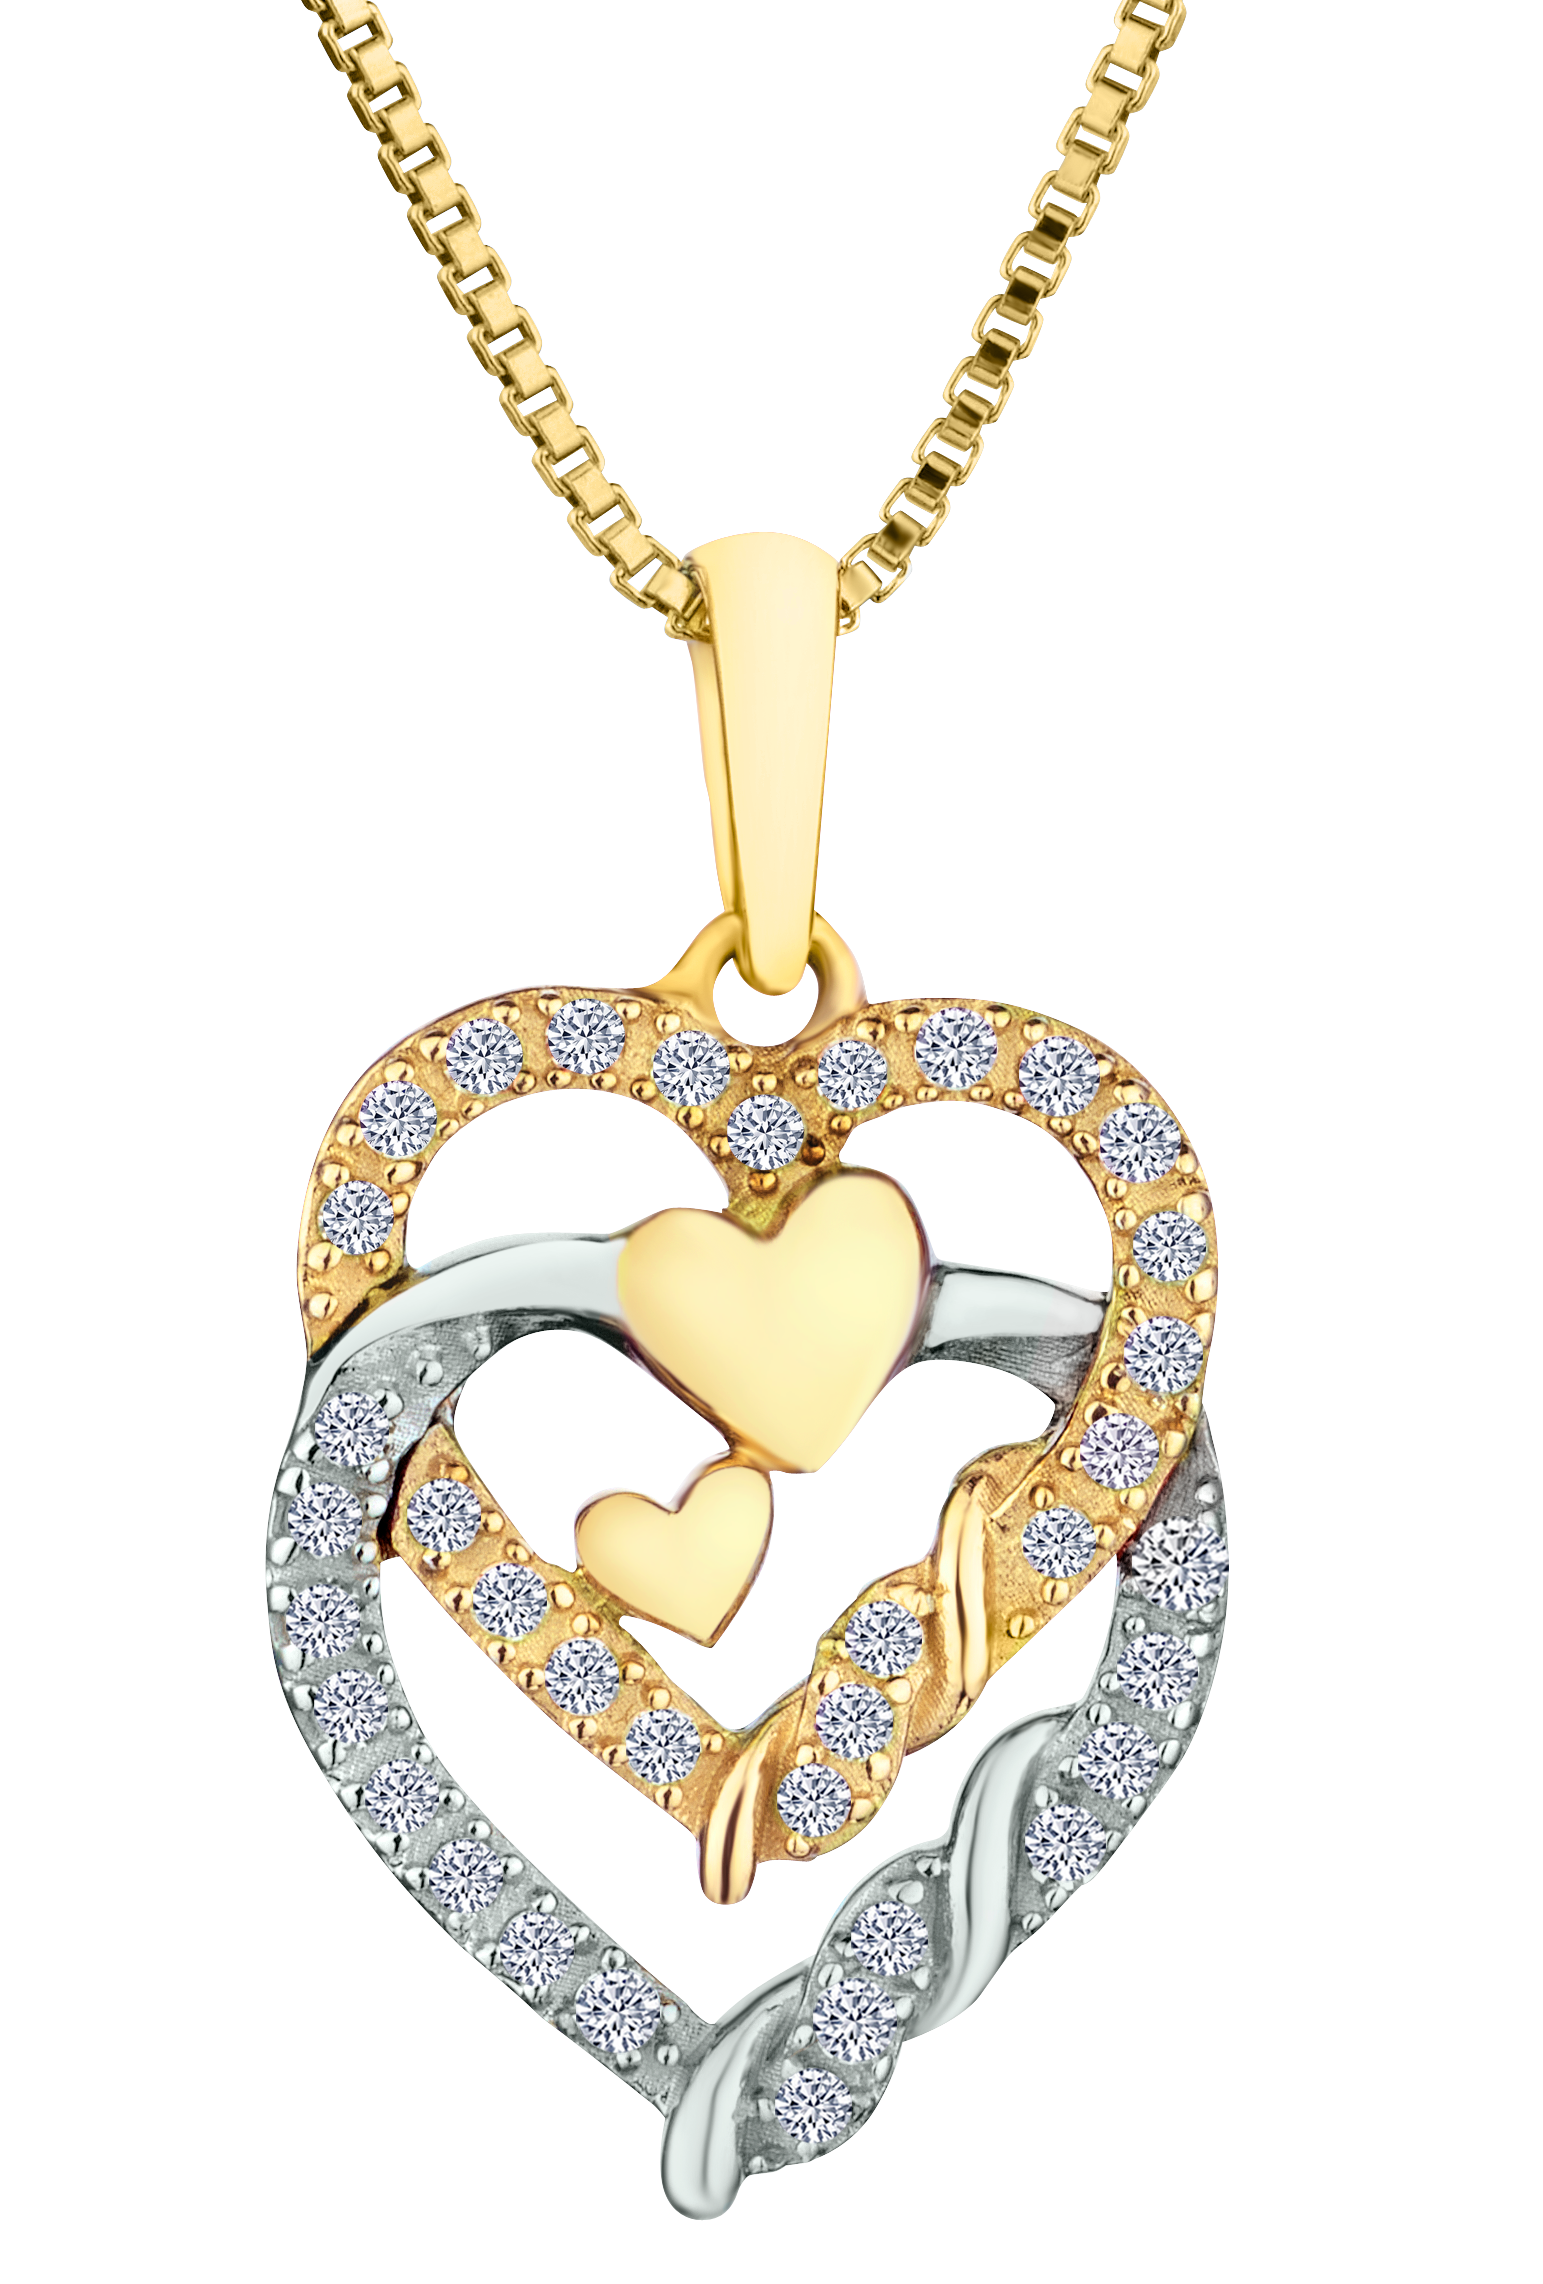 .12 Carat of Diamonds "Double Hearts" Pendant, Silver.....................NOW